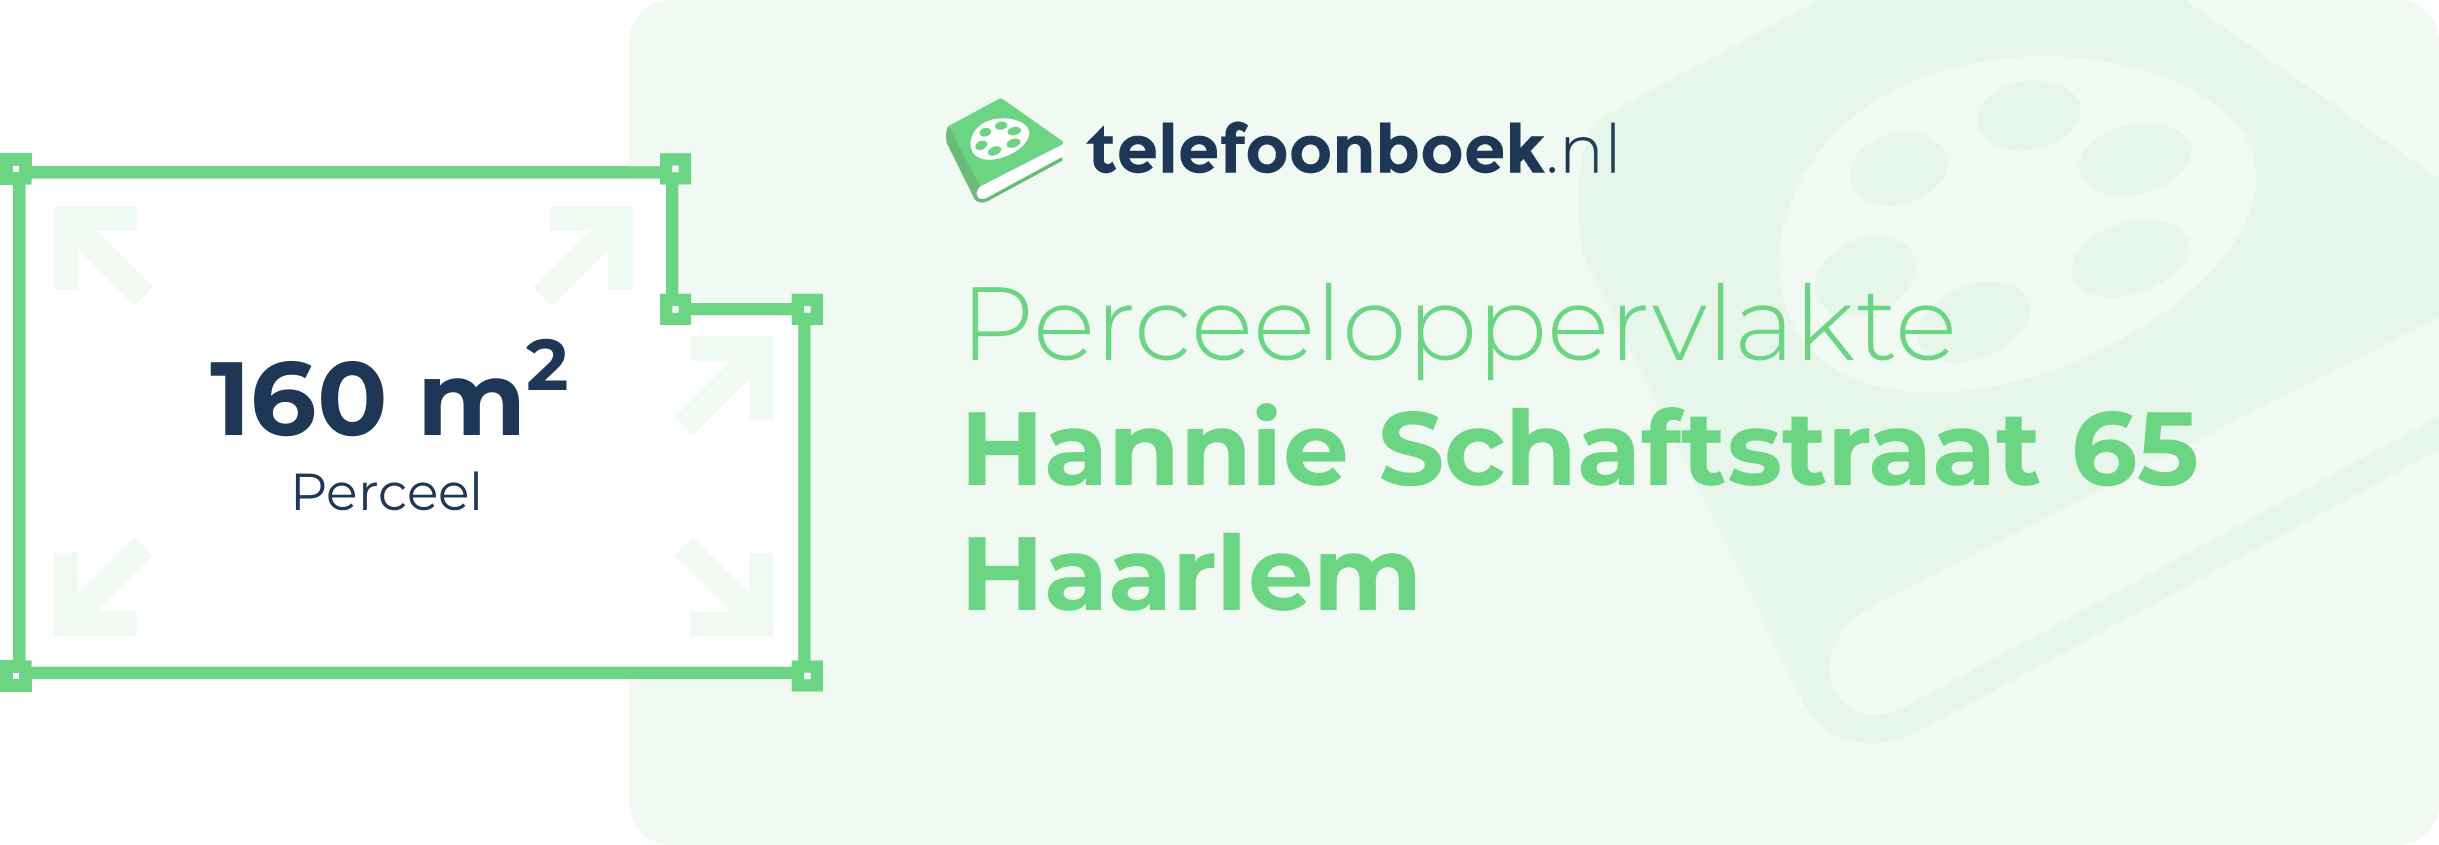 Perceeloppervlakte Hannie Schaftstraat 65 Haarlem